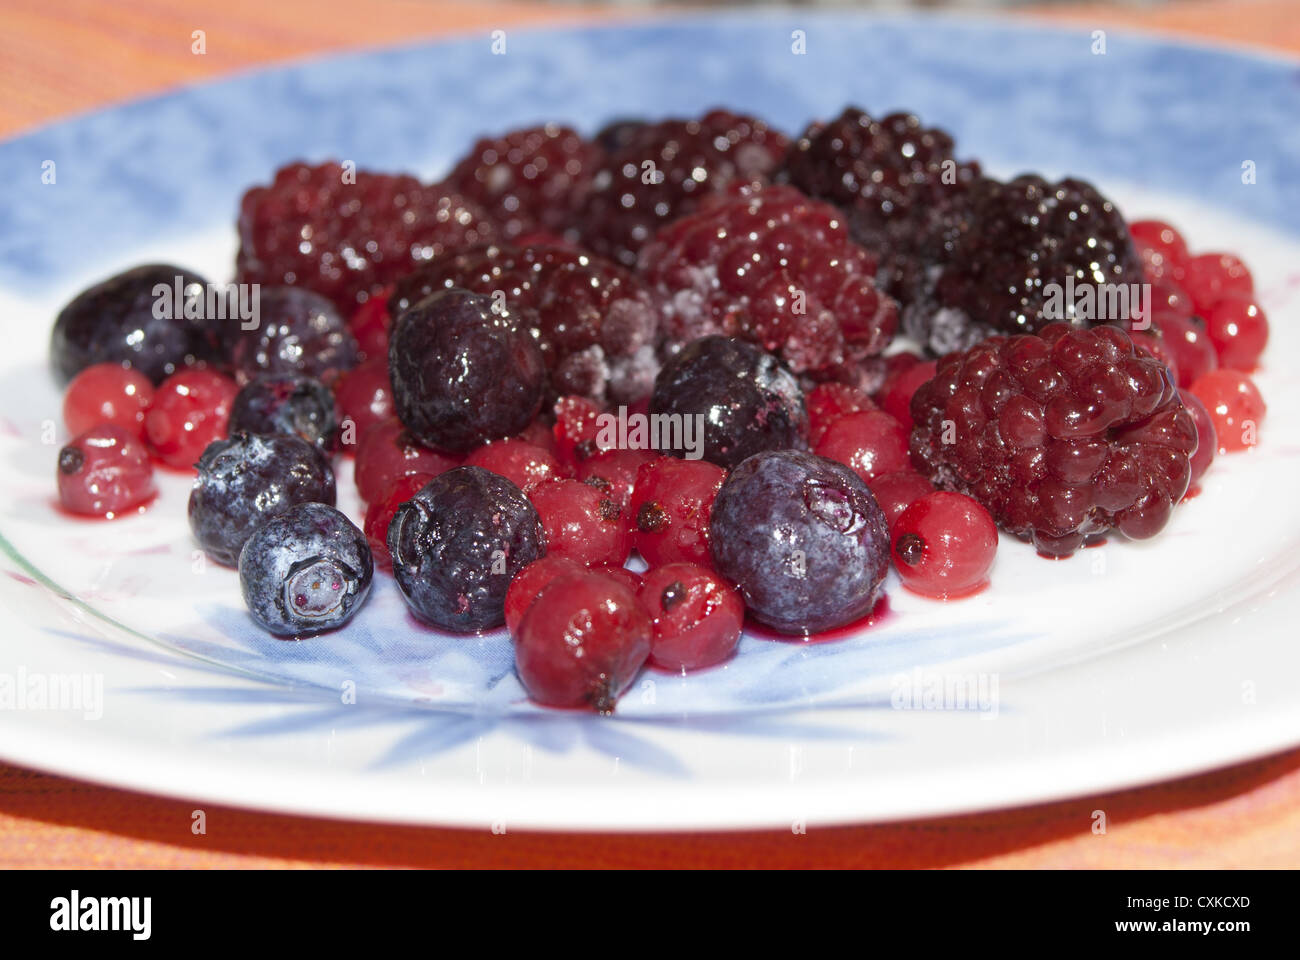 composition of berries: blackberries, blueberries, raspberries Stock Photo